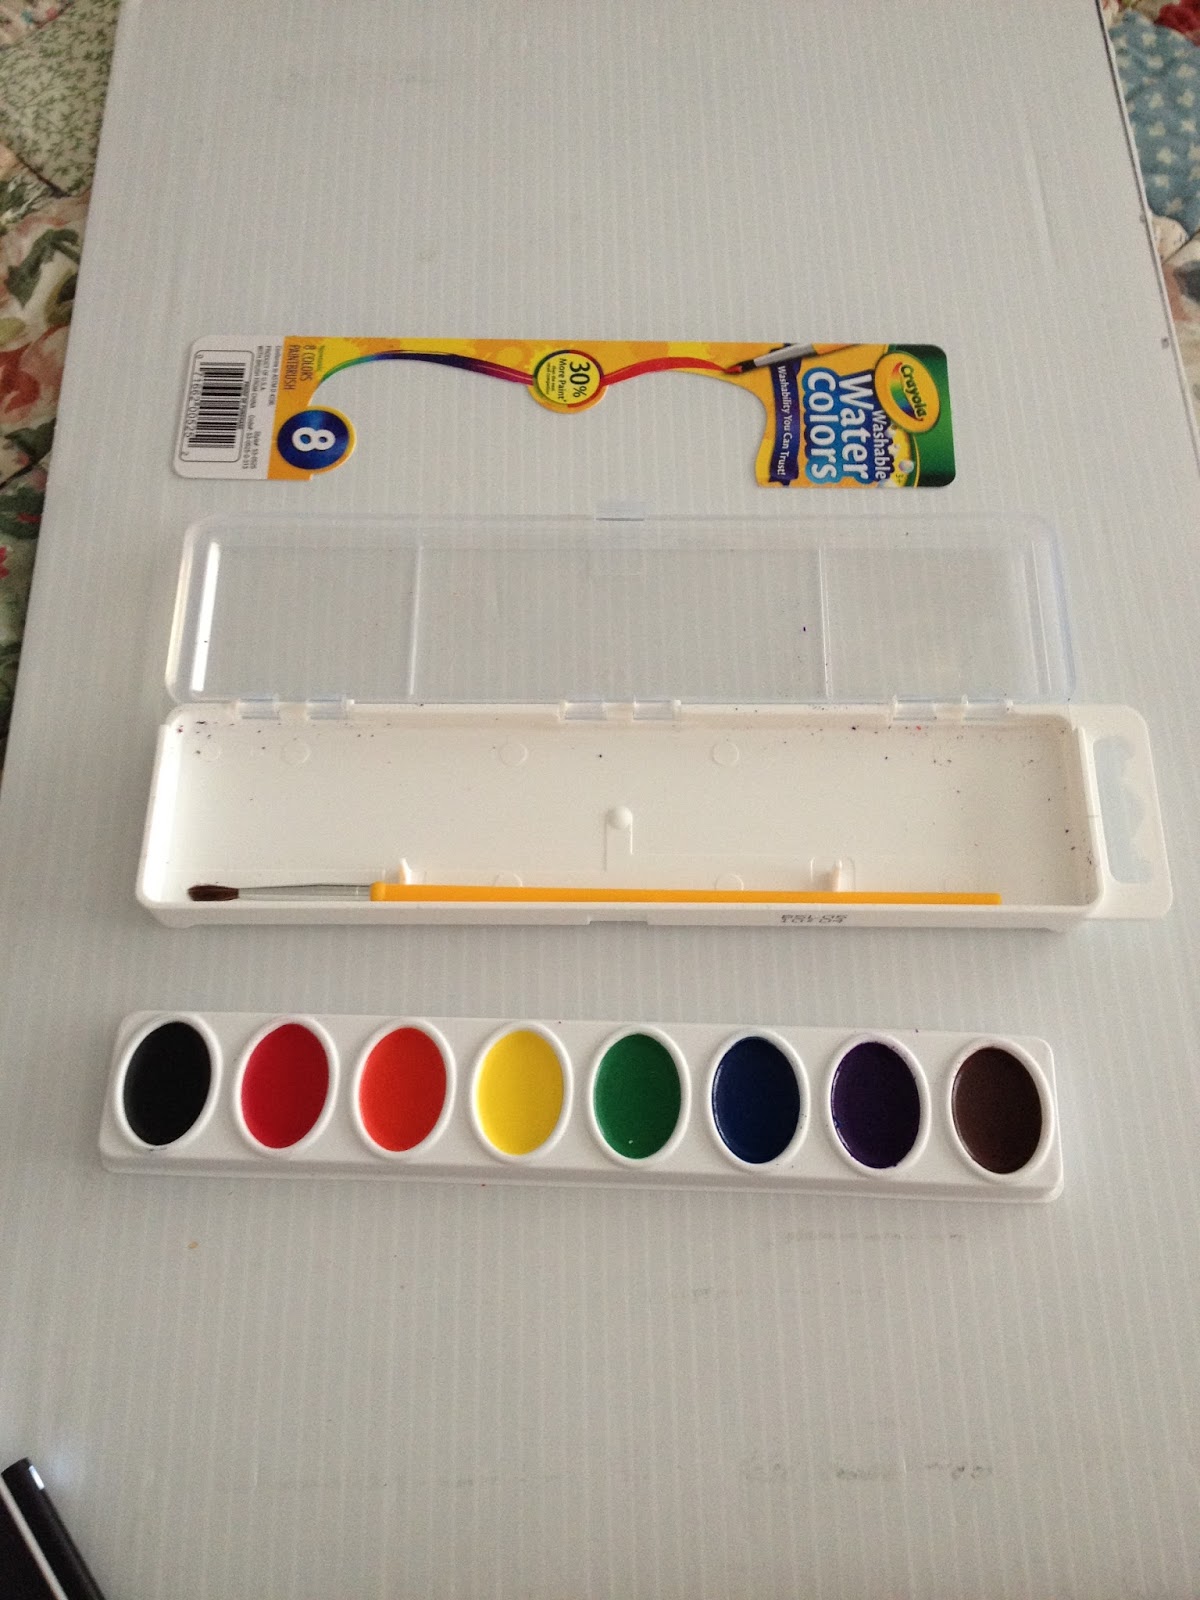 Crayola Neon Crayons, 8 Count, Non-washable Wax Crayons, Intense Brightness